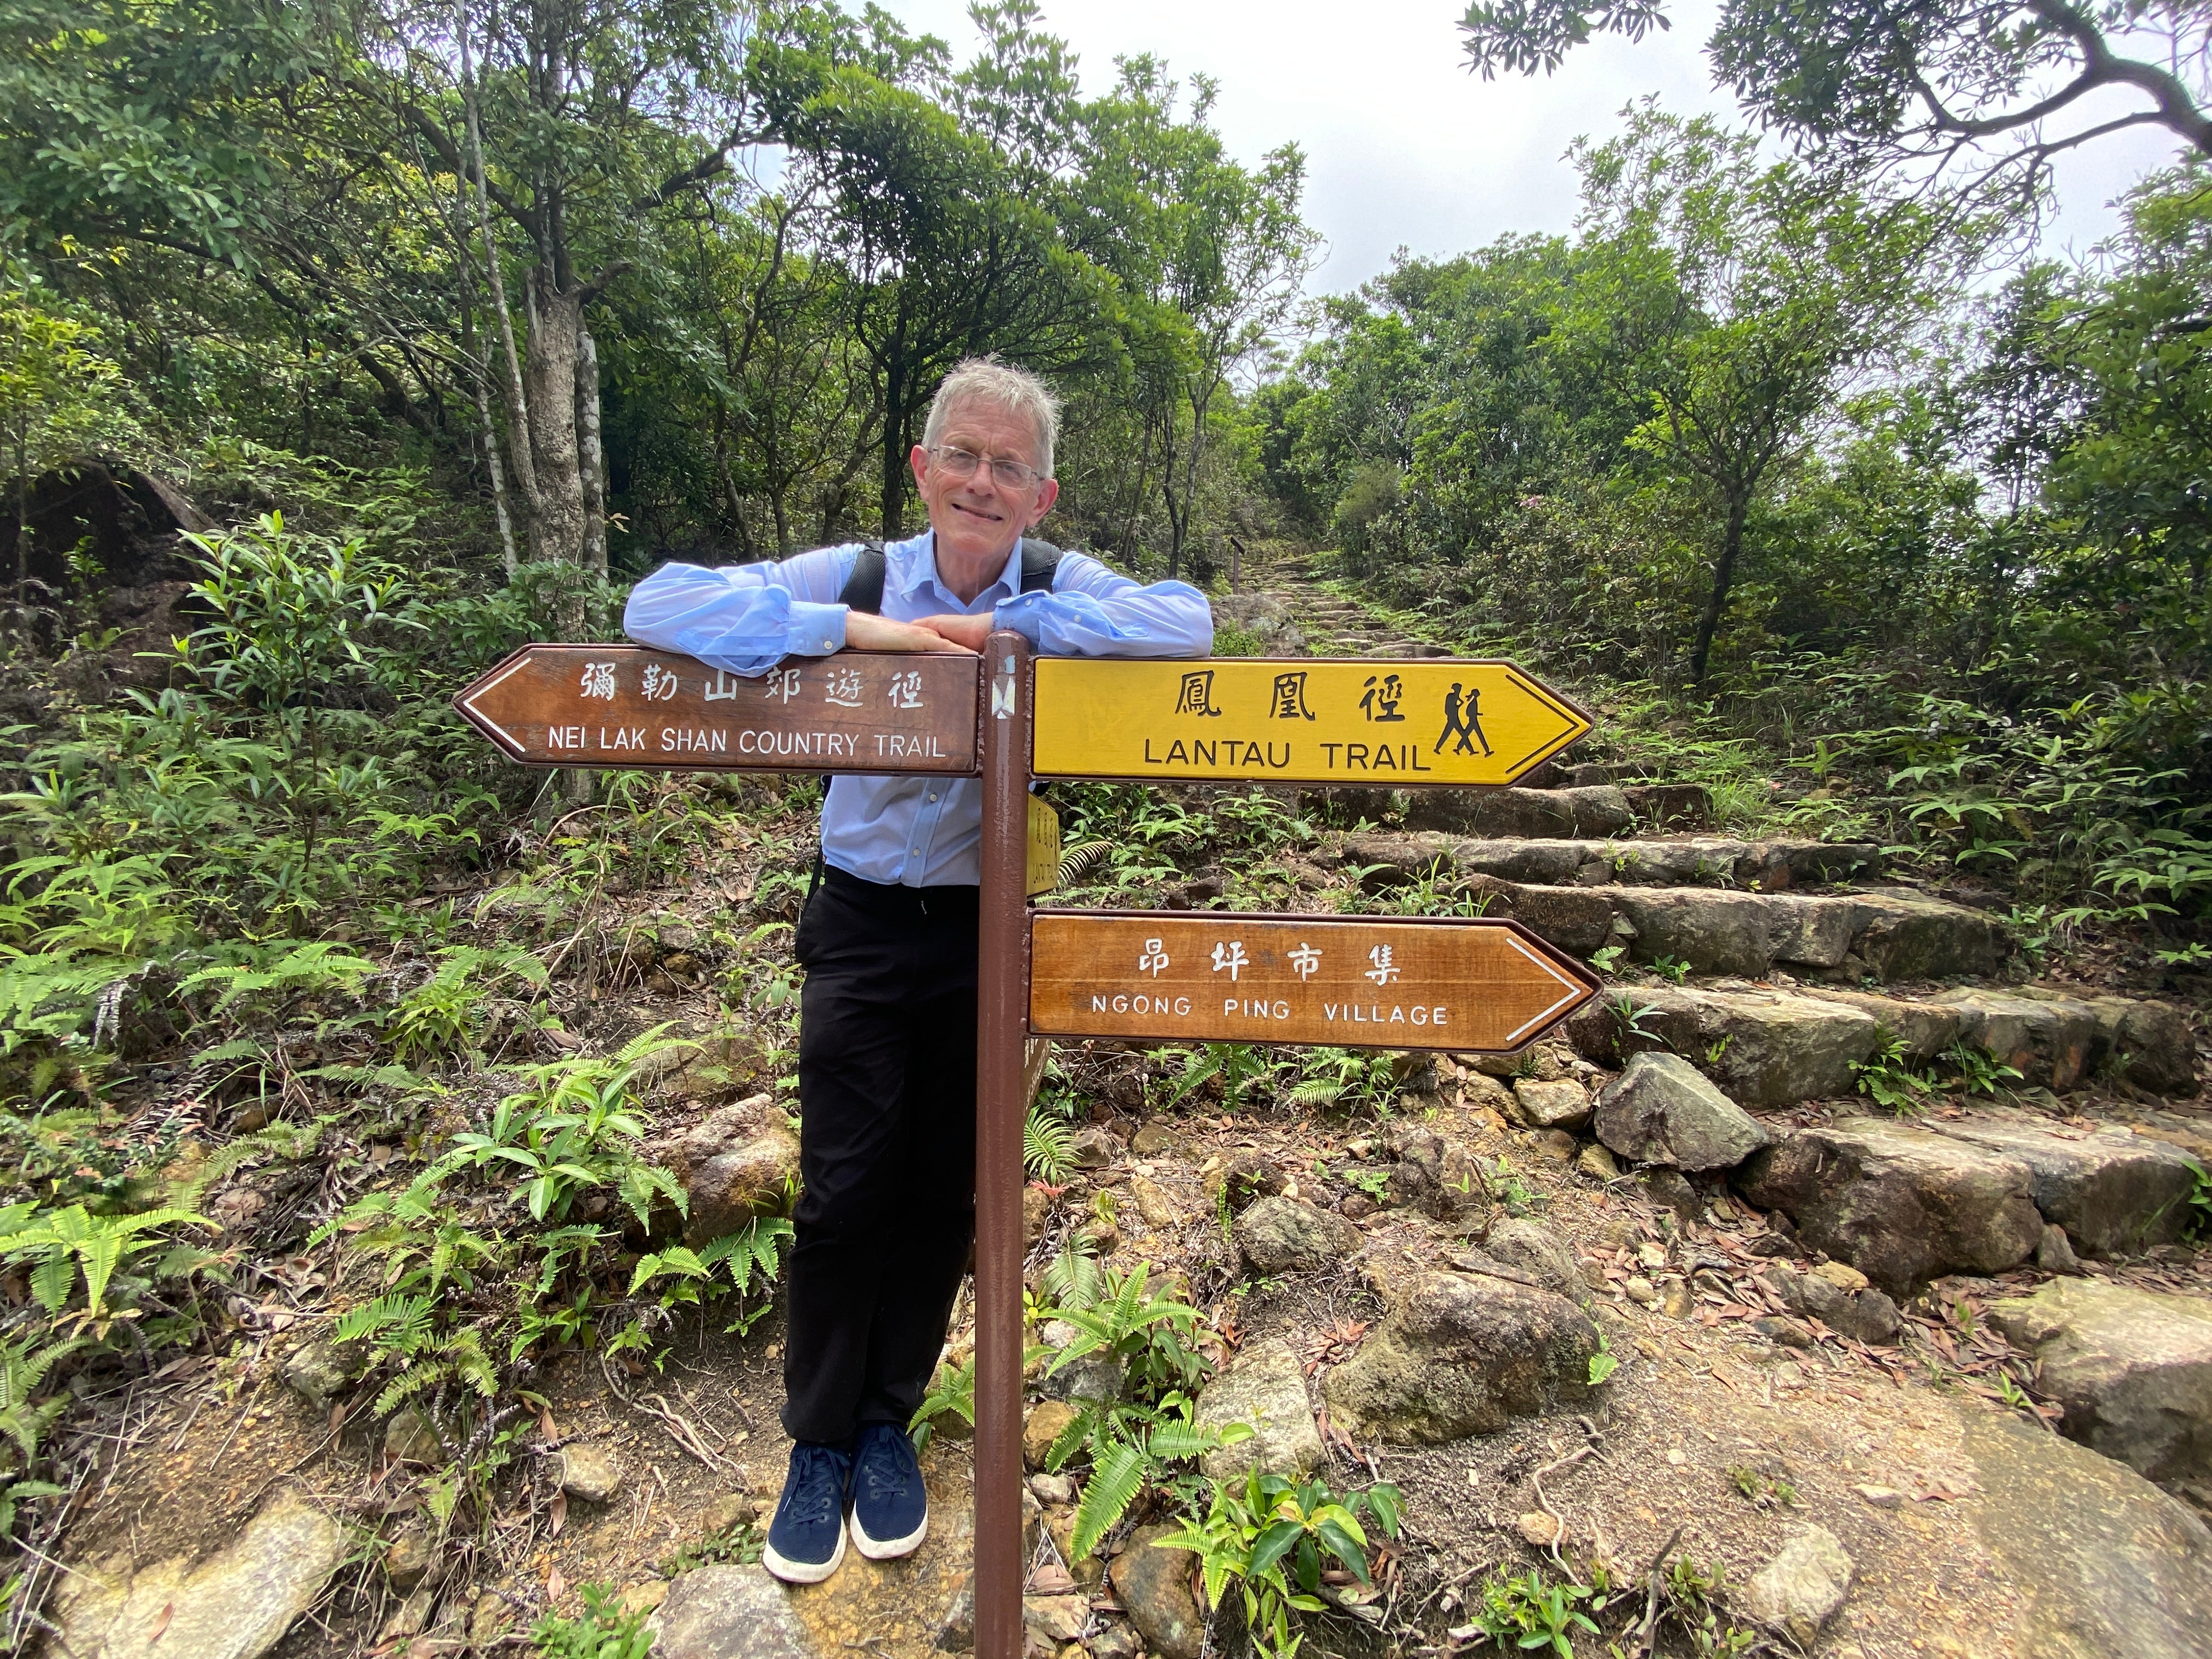 Which way now? Simon Calder on the Lantau Trail